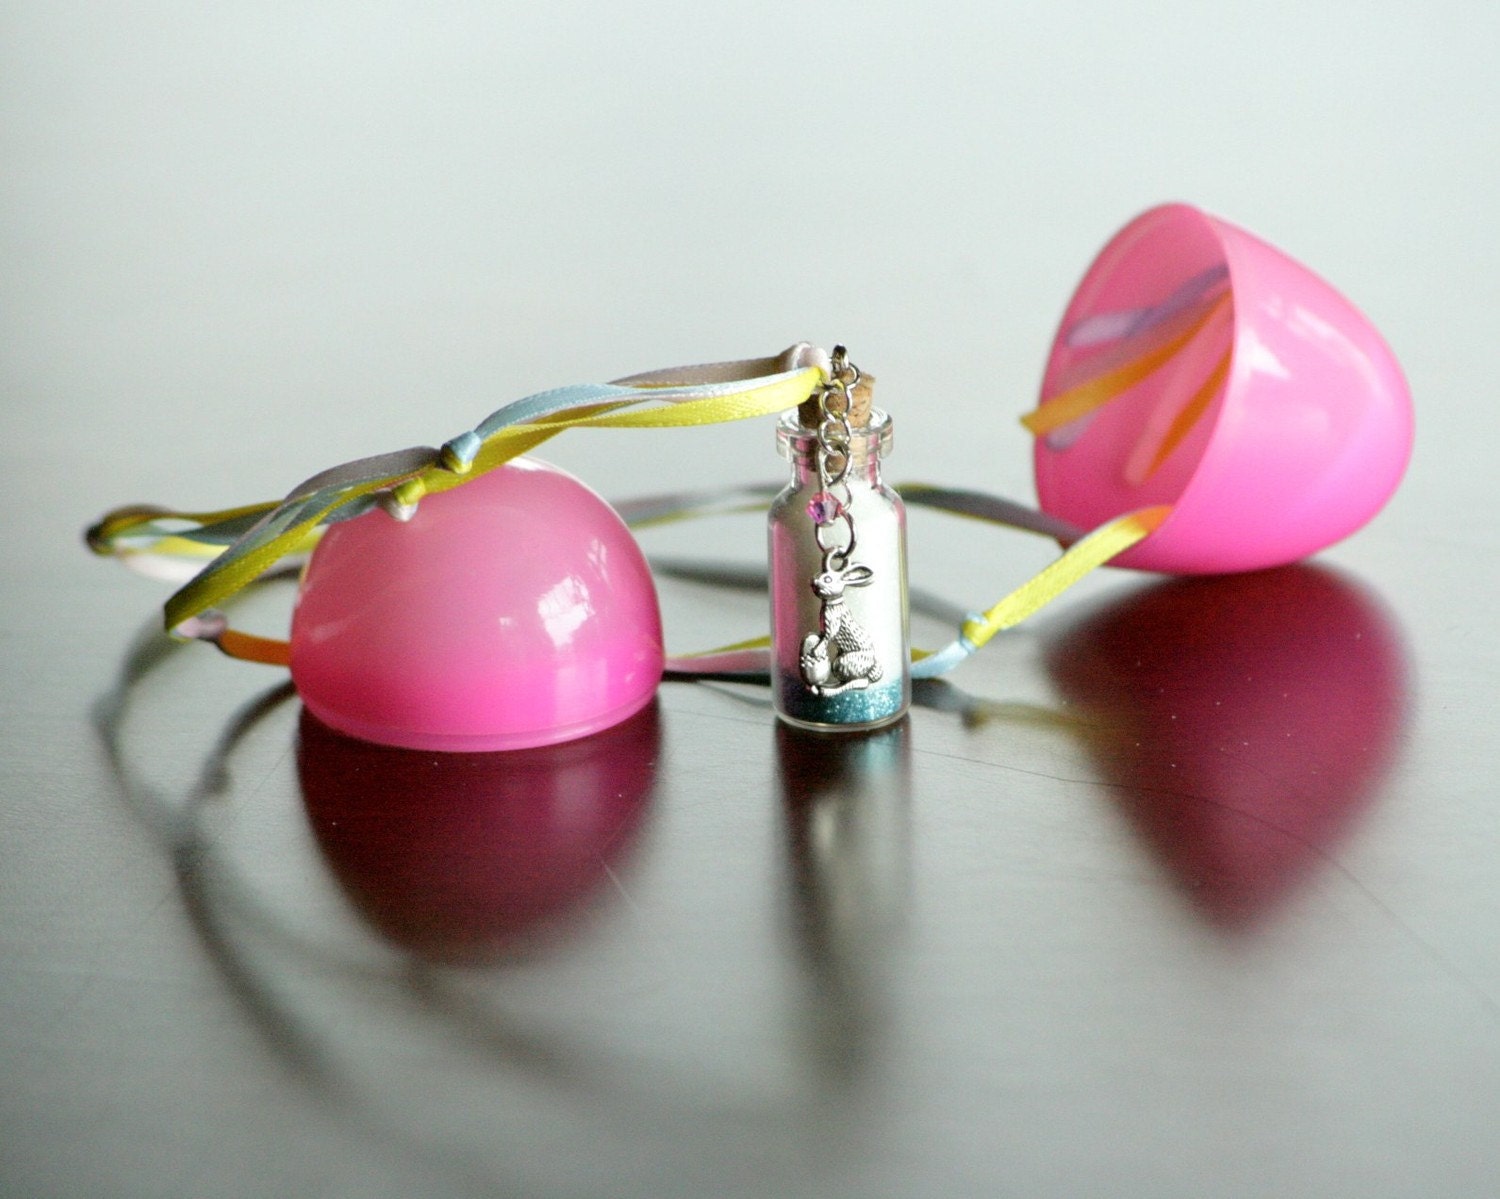 Easter Bunny Pixie Dust Necklace, Fairy Dust, Easter Party Favors, Easter Egg Stuffer, Easter Basket